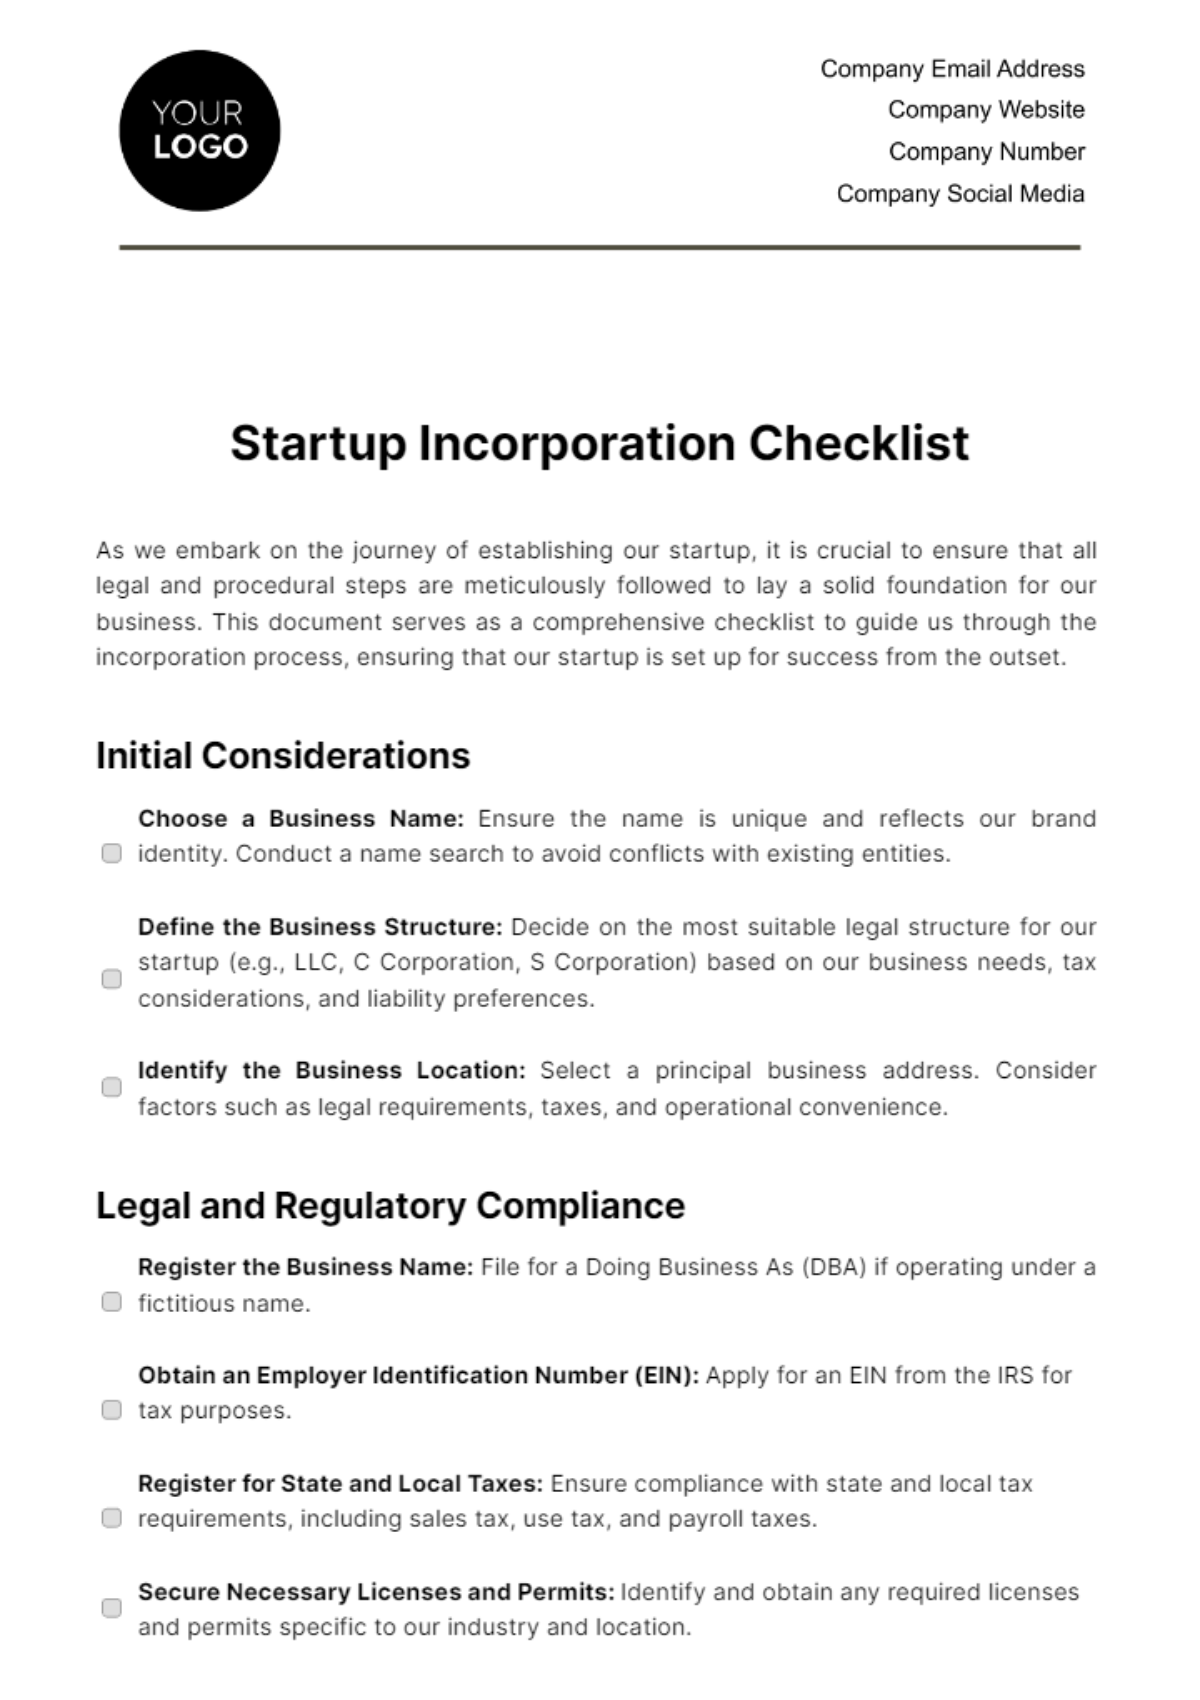 Free Startup Incorporation Checklist Template